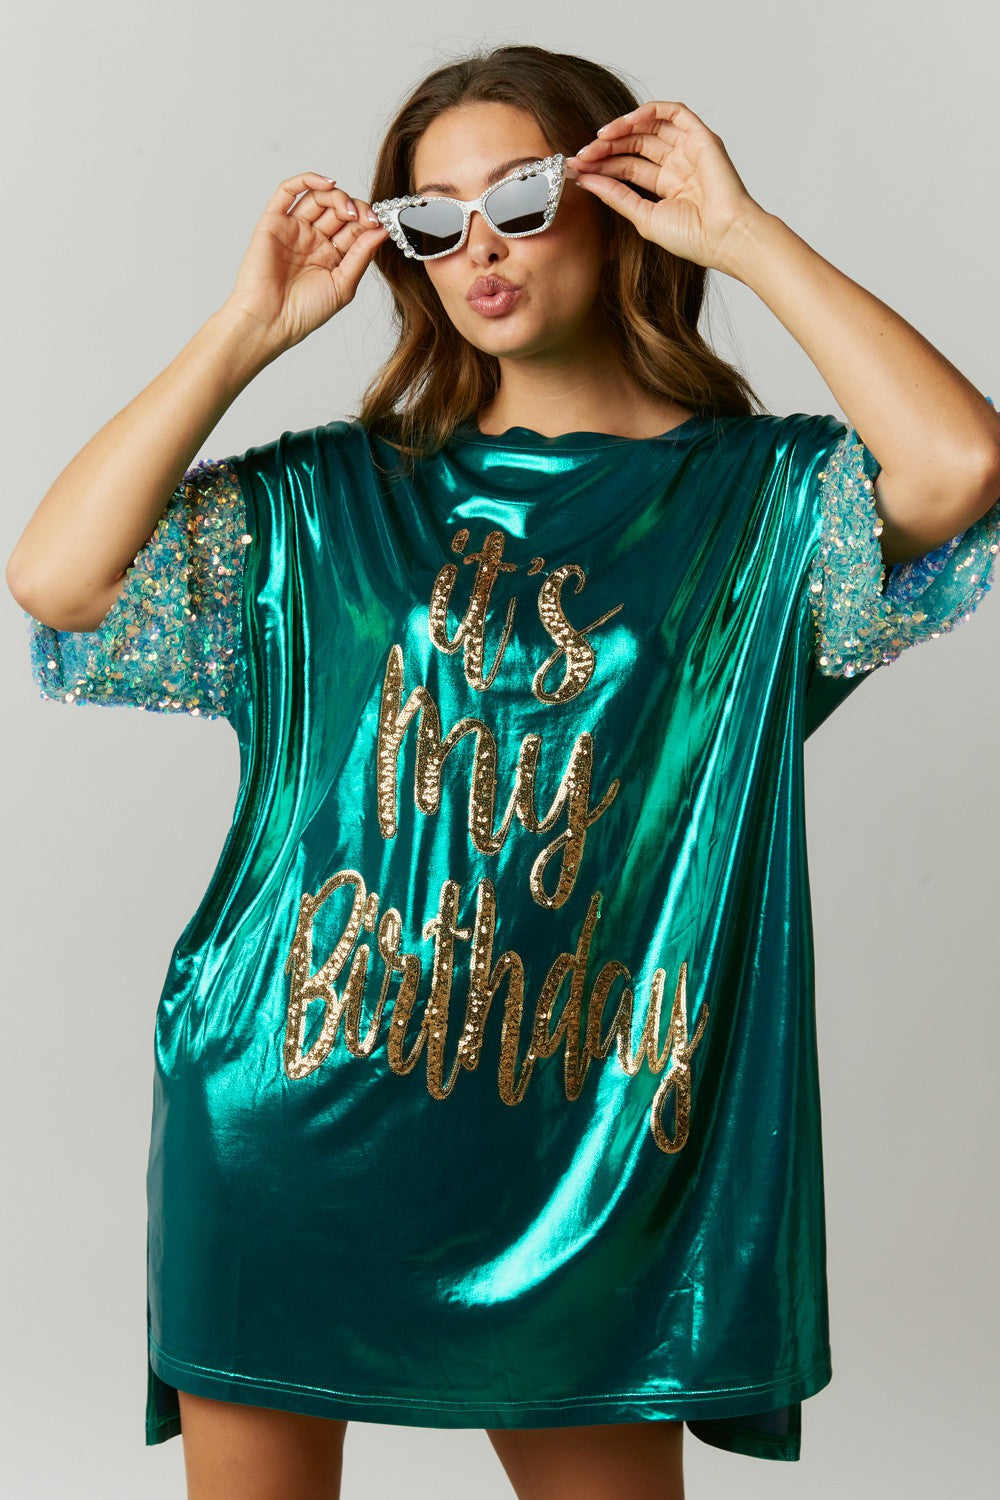 Birthday Queen Foil Sequin Dress in Turquoise